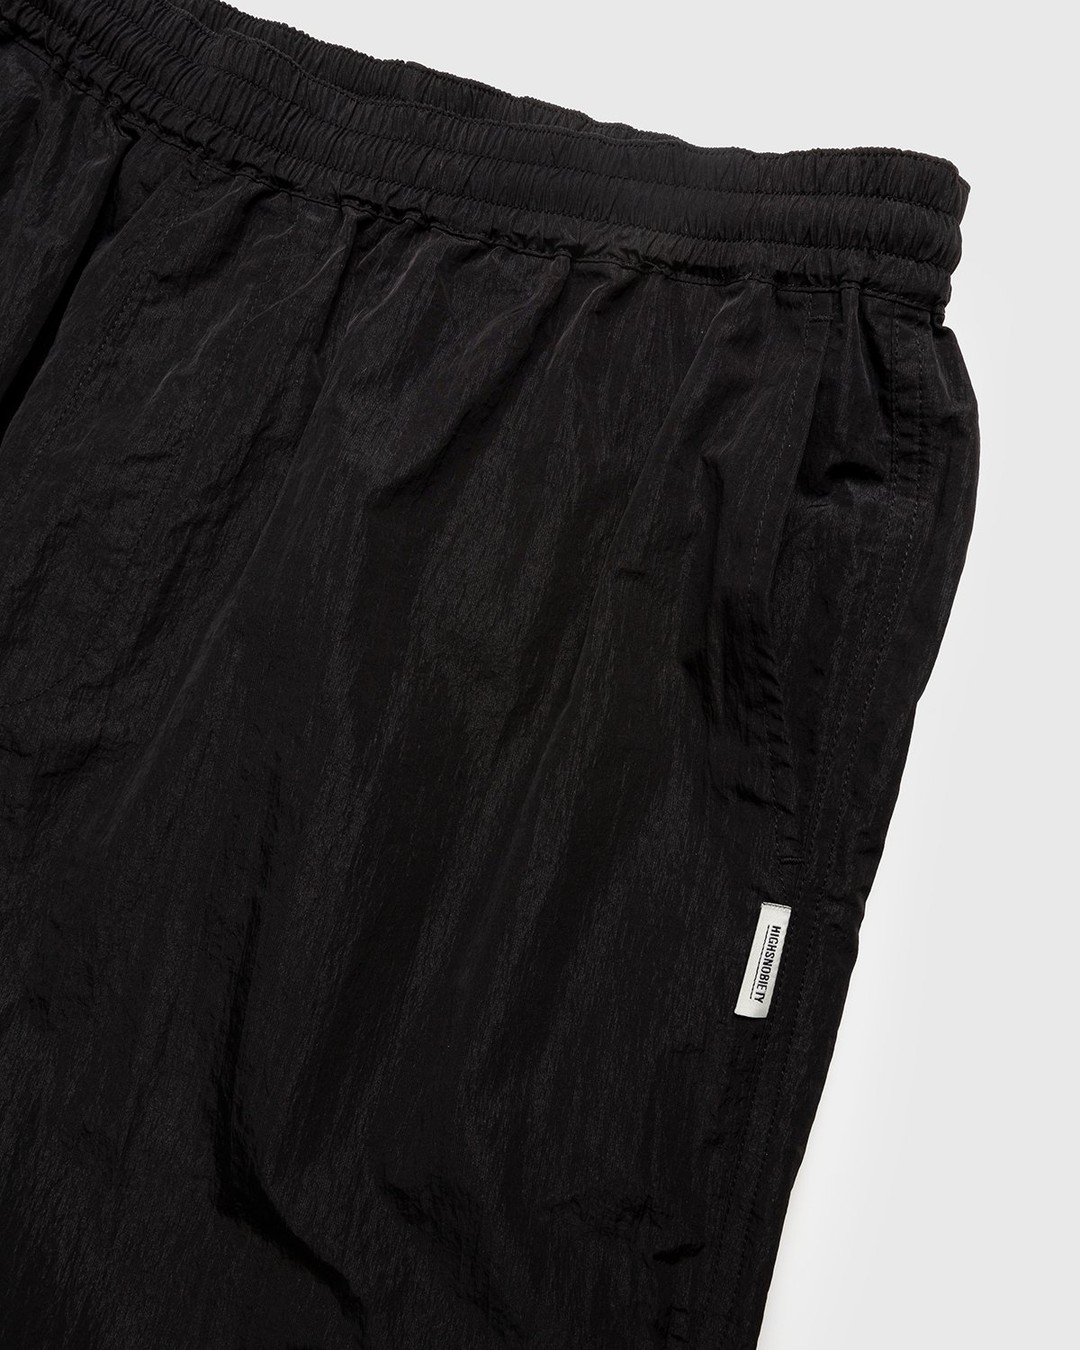 Highsnobiety – Crepe Nylon Elastic Pants Black - Active Pants - Black - Image 3